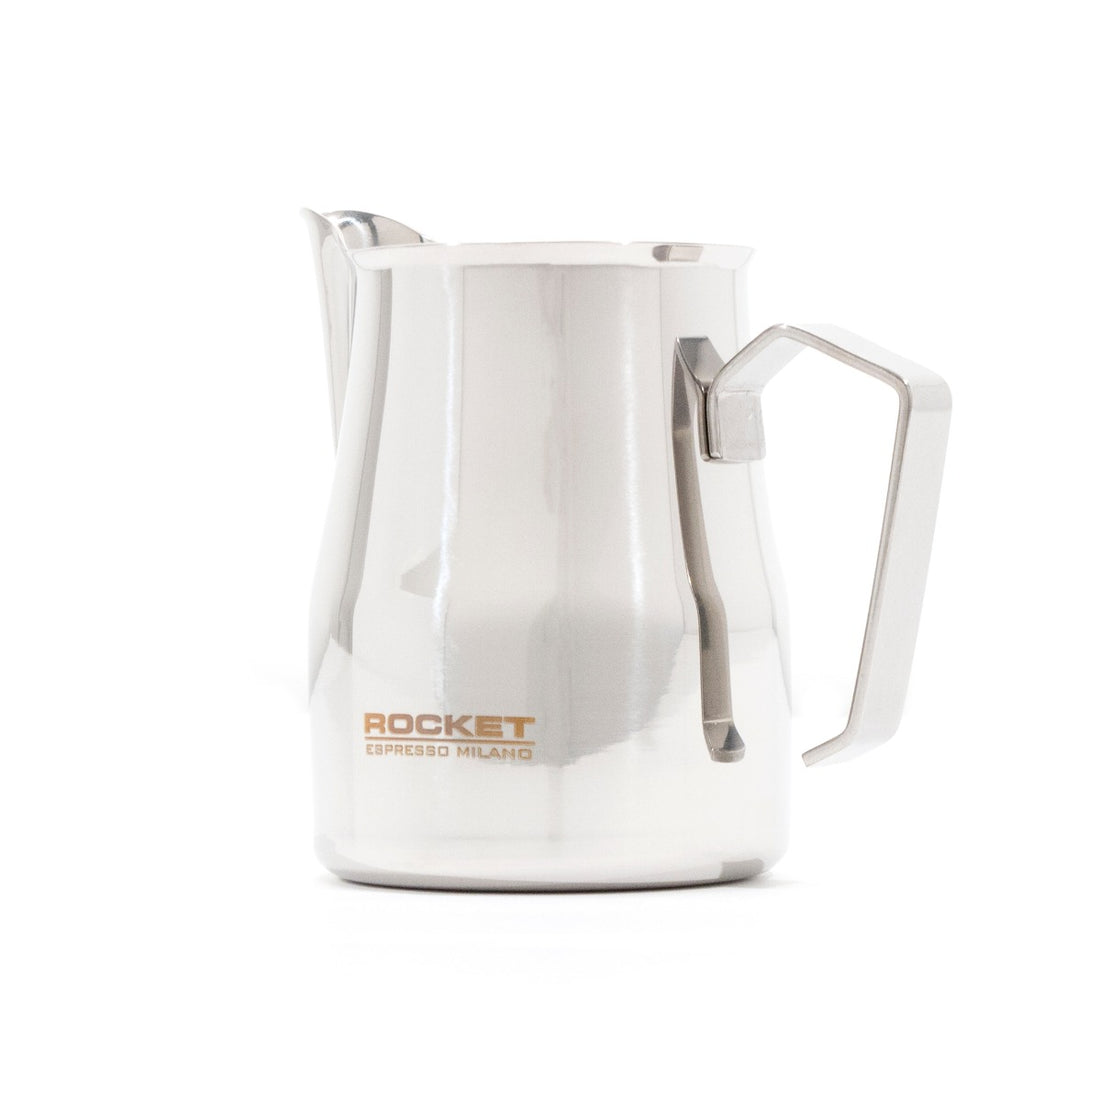 Rocket Espresso 750ml Milk Jug - Stainless Steel